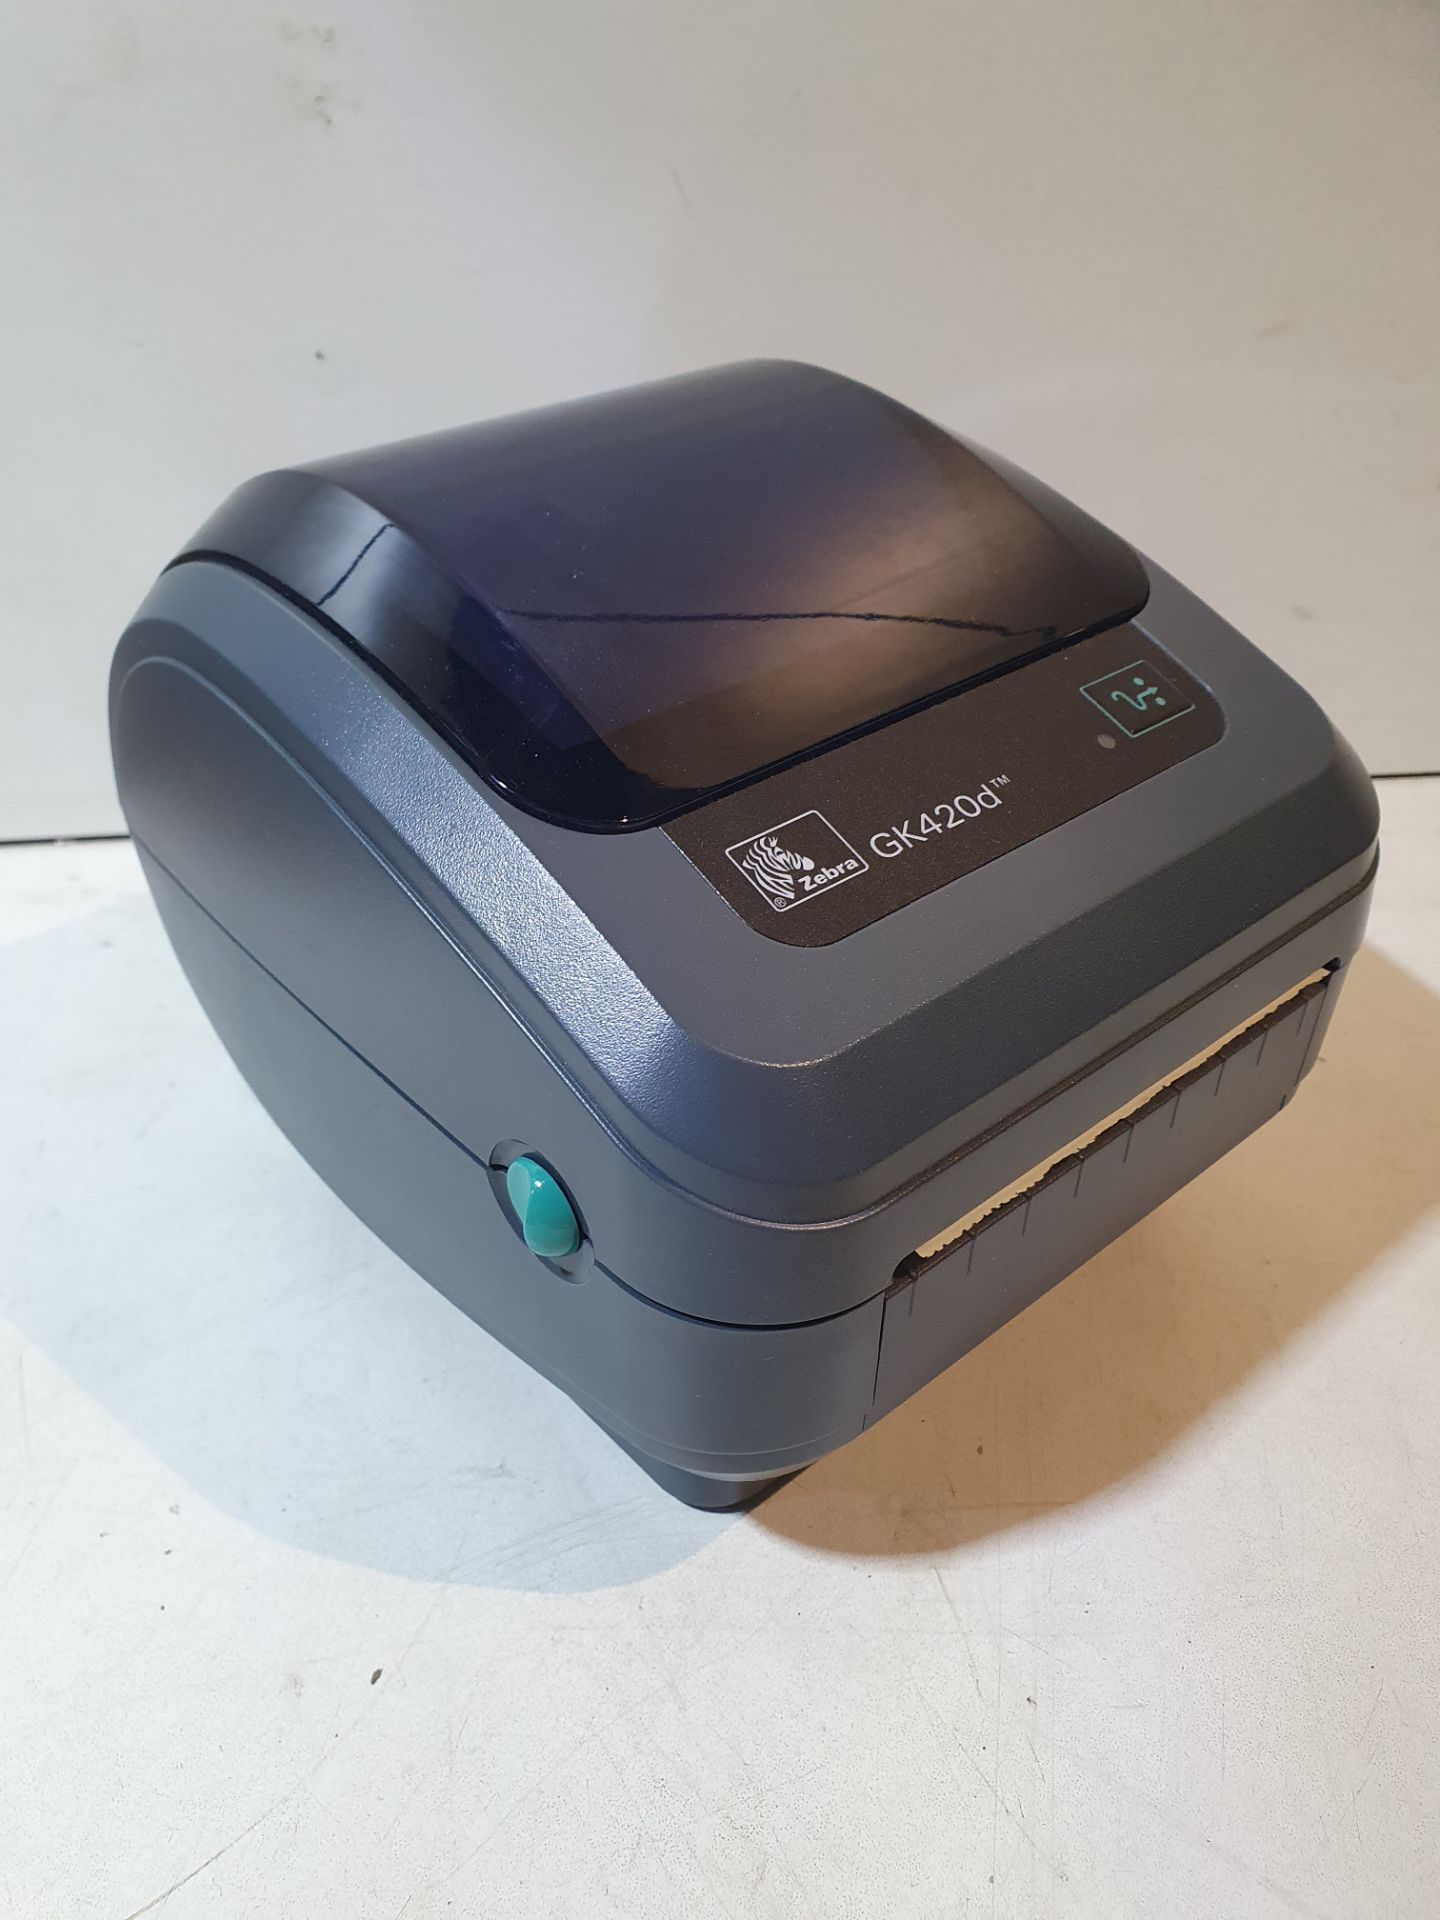 Zebra Printer with Power Lead GK420d - Image 5 of 5